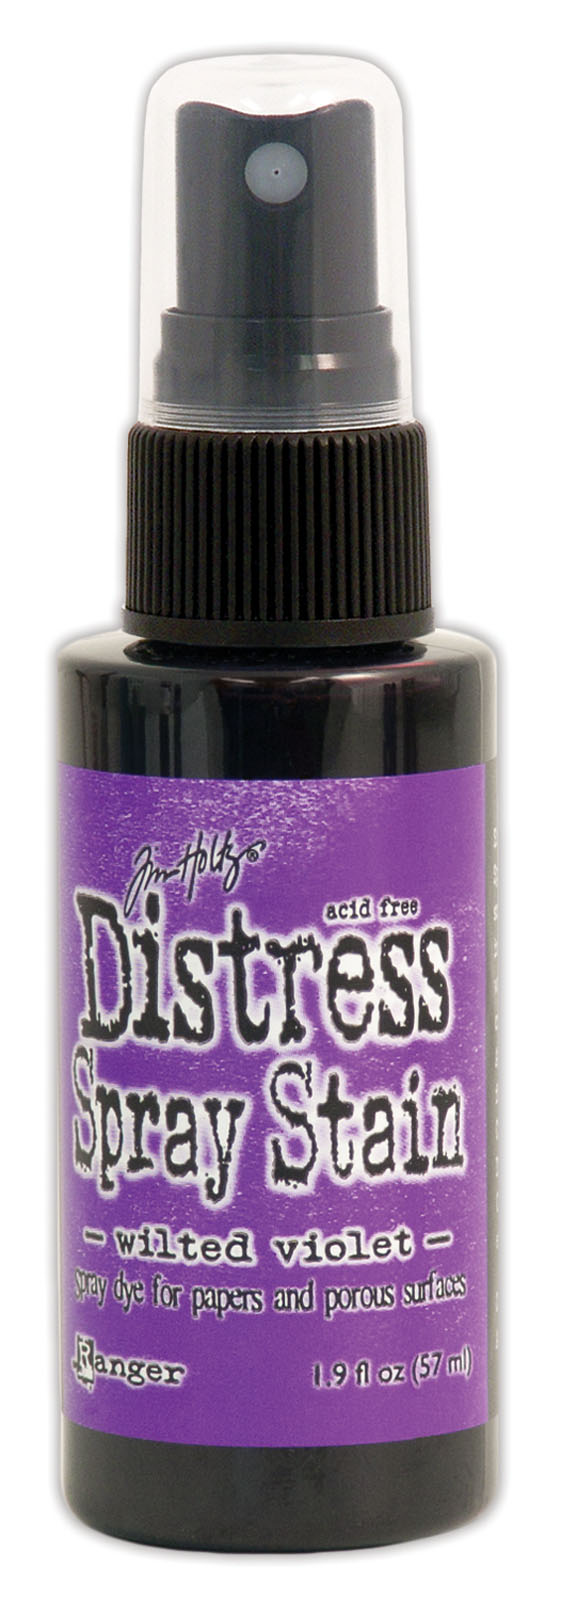 Ranger • Distress spray stain Wilted violet